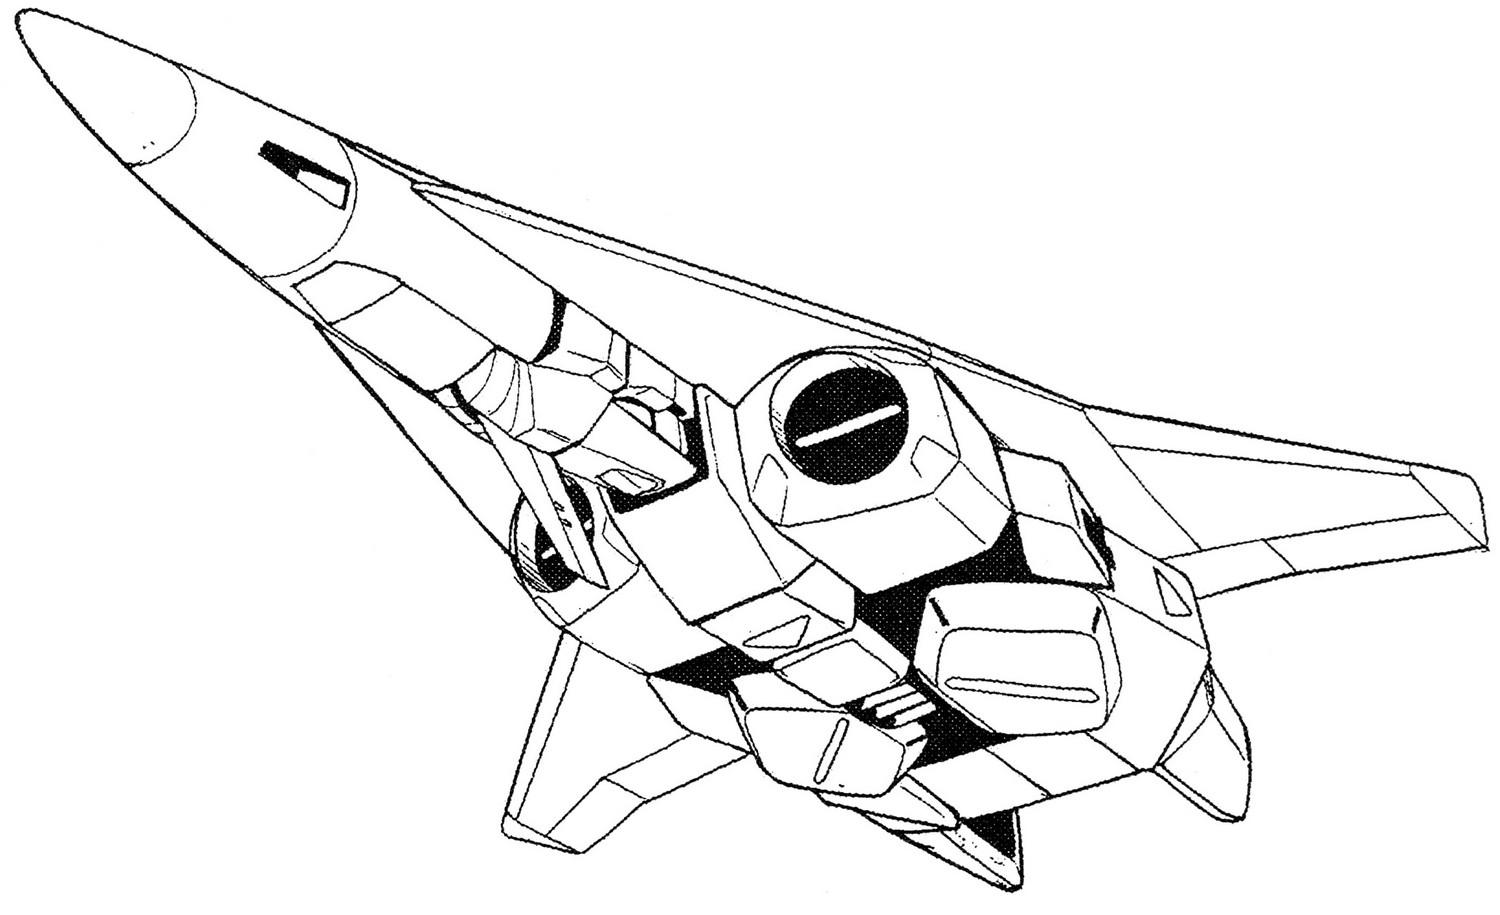 afc-01z-fighter-underside